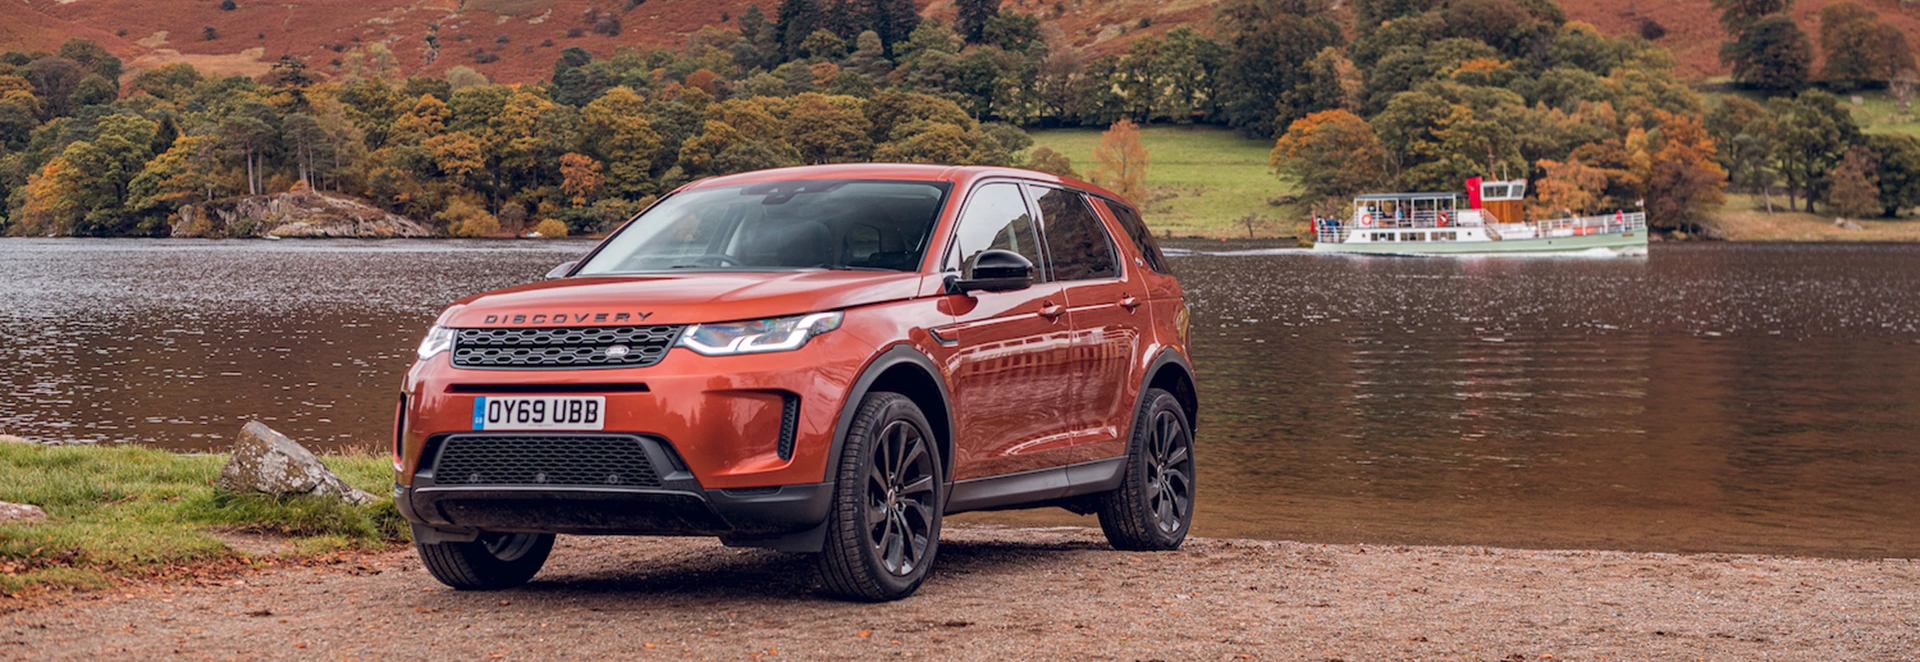 Land Rover Black Friday car deals 2019 revealed